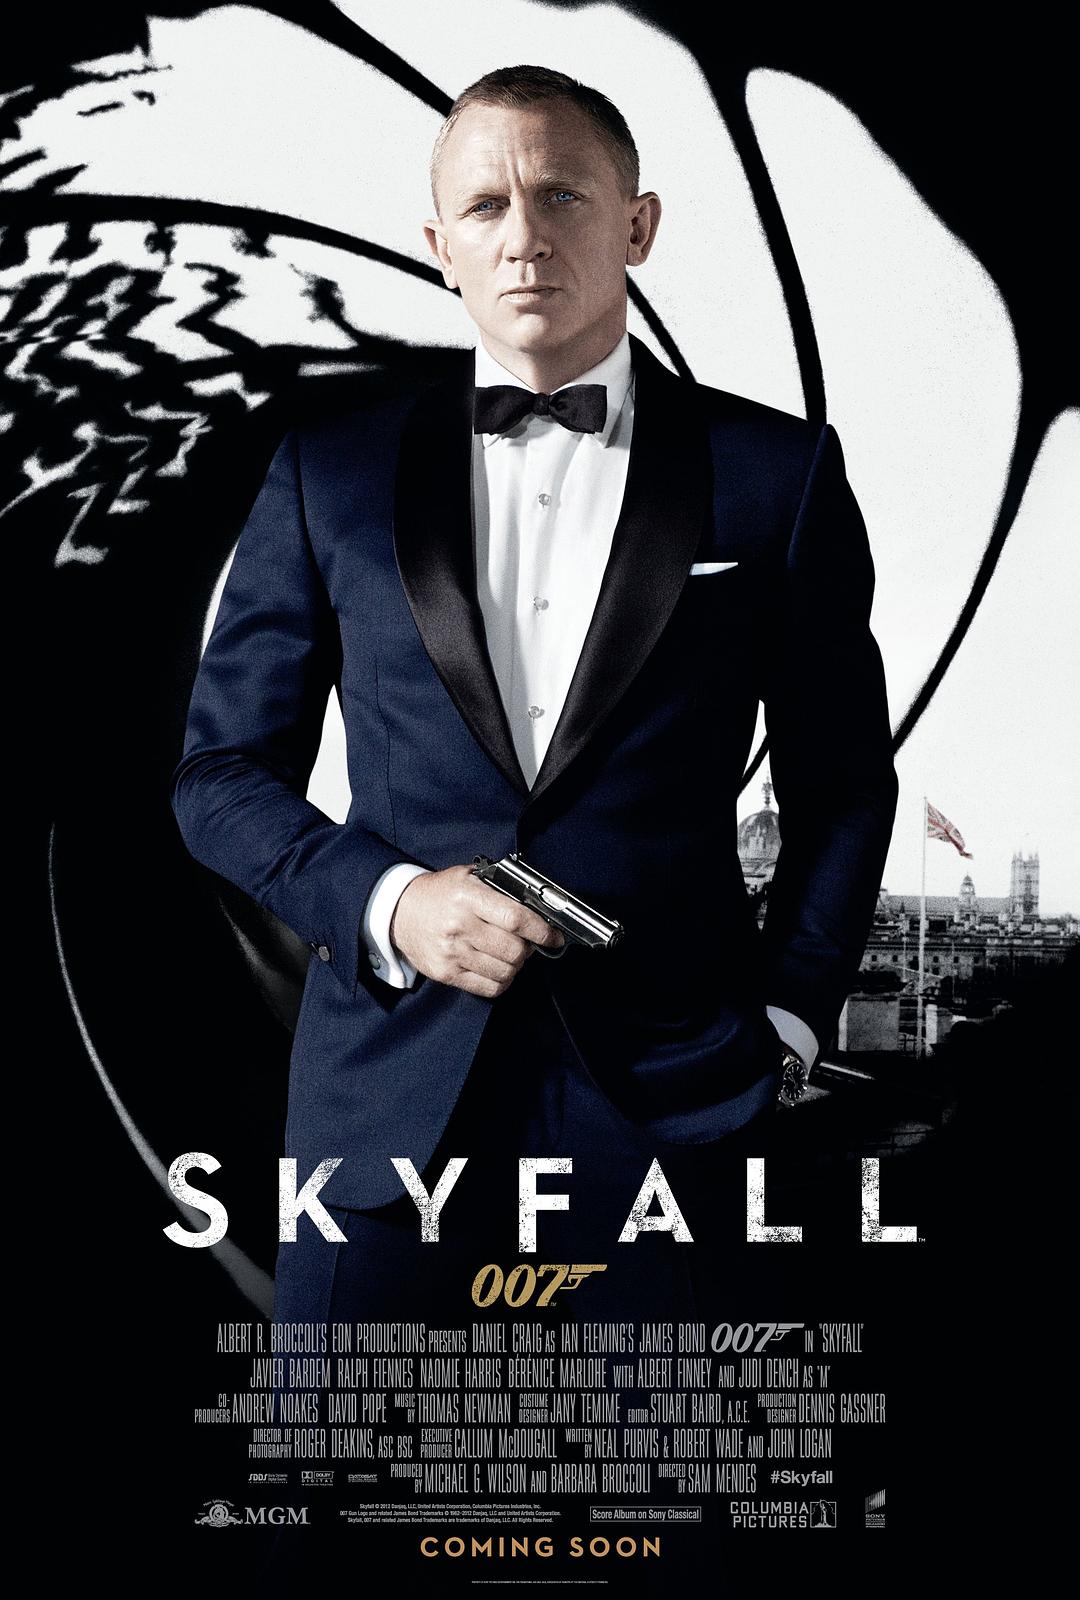 007:大破天幕杀机/007之天降杀机 Skyfall.2012.REMASTERED.1080p.BluRay.x264.DTS-HD.MA.5.1-SWTYBLZ 17.18GB-1.png